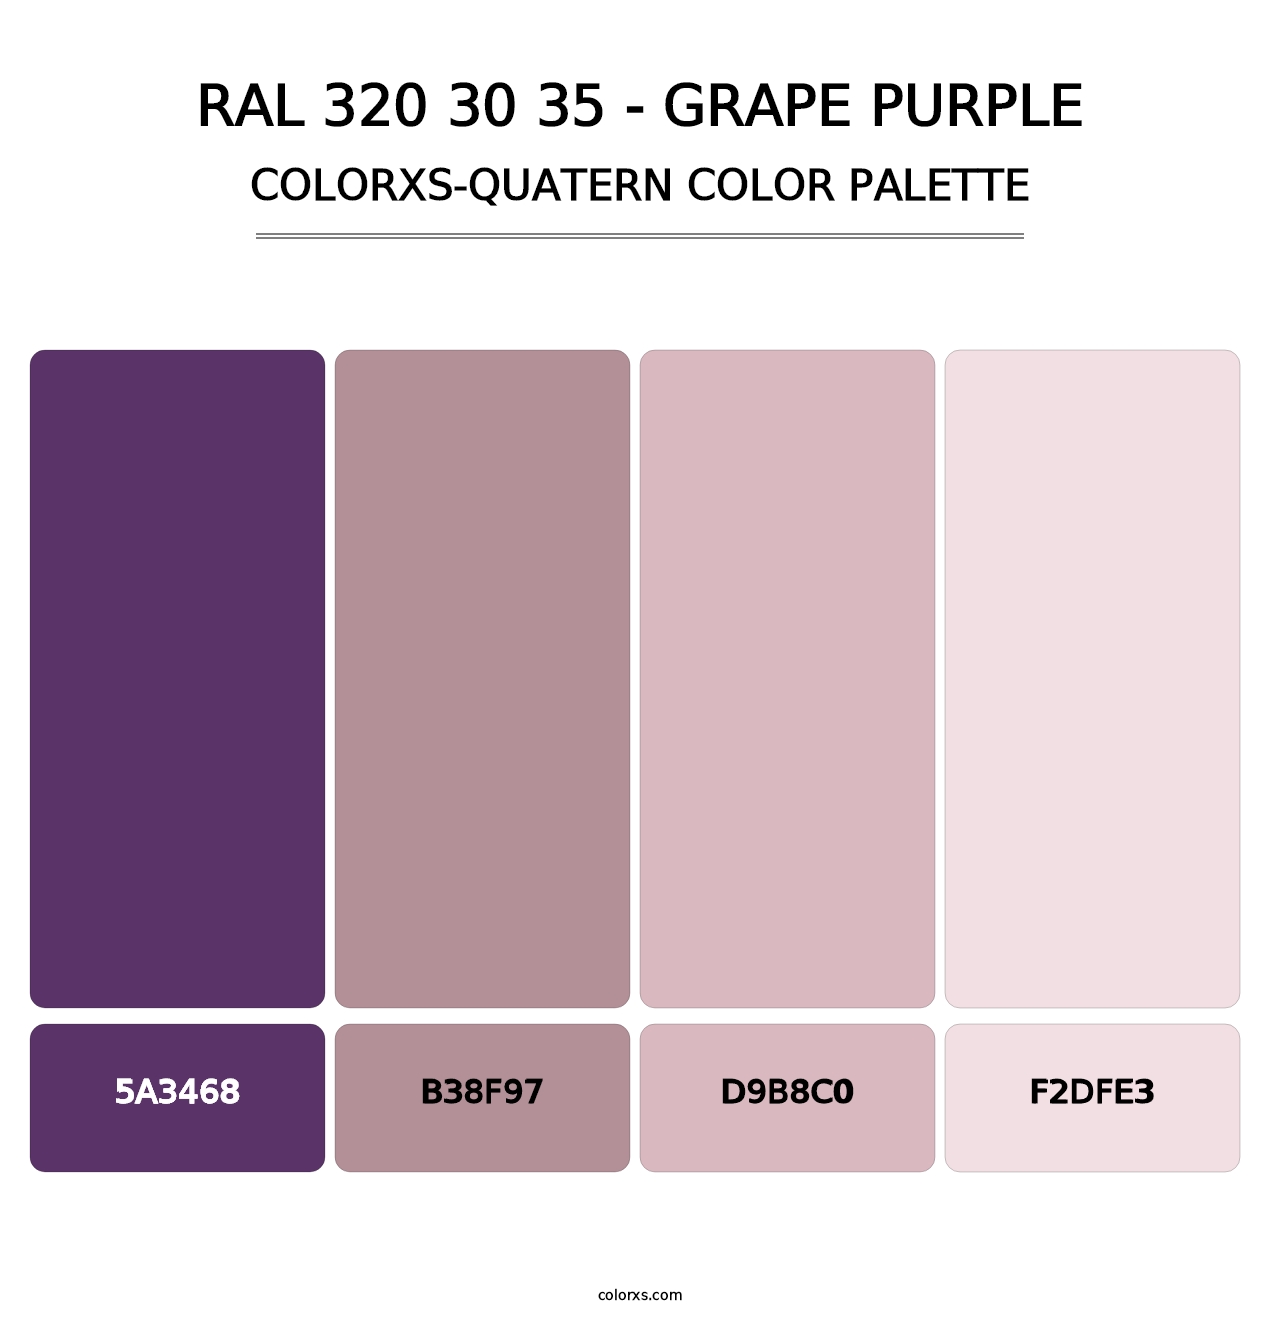 RAL 320 30 35 - Grape Purple - Colorxs Quatern Palette